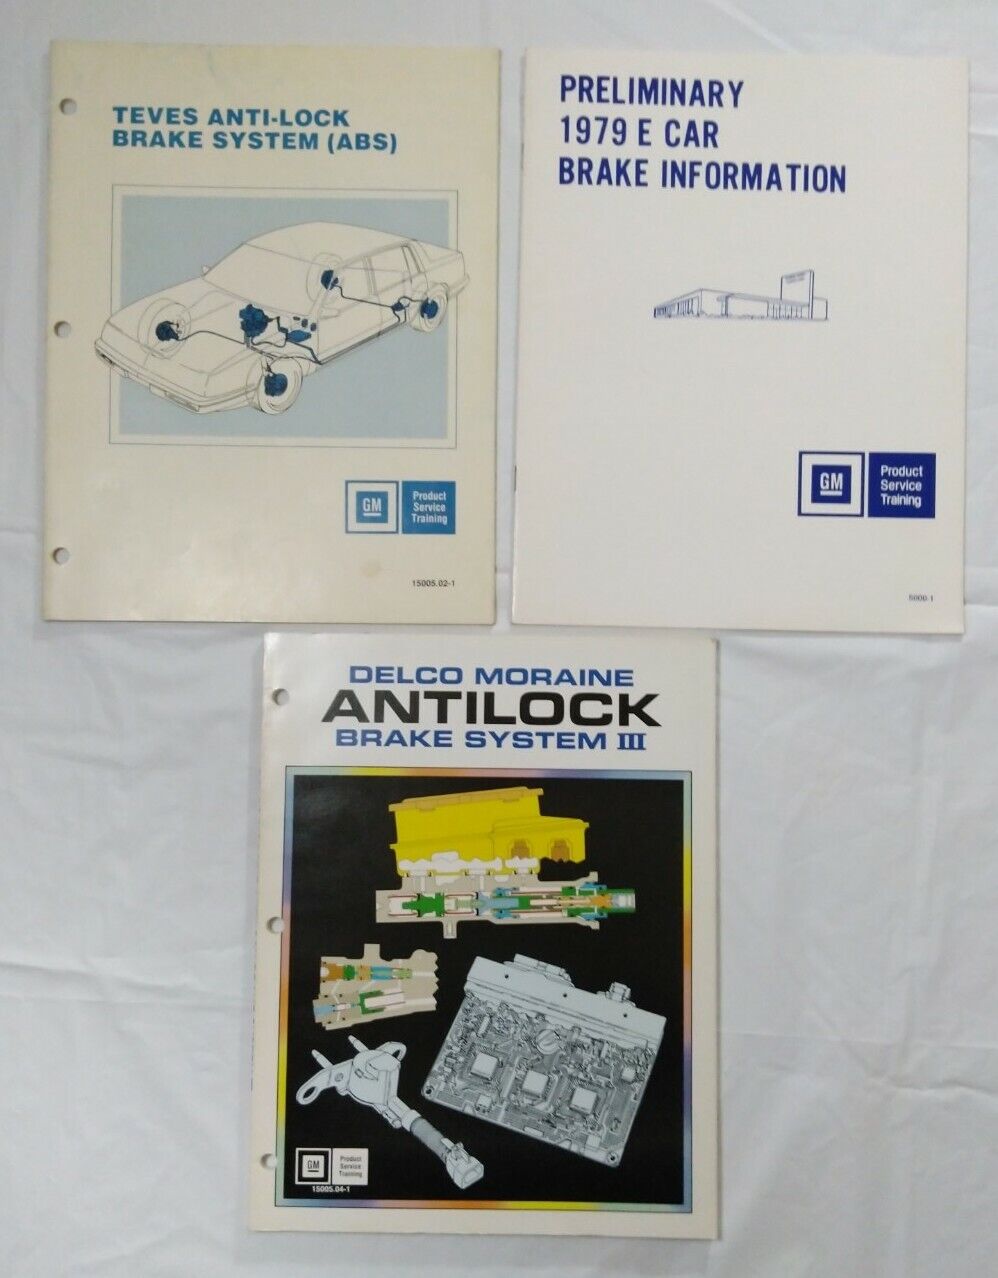 GM Product Service Training Manual Lot Air Brake Systems Anti Lock 1978 88 85